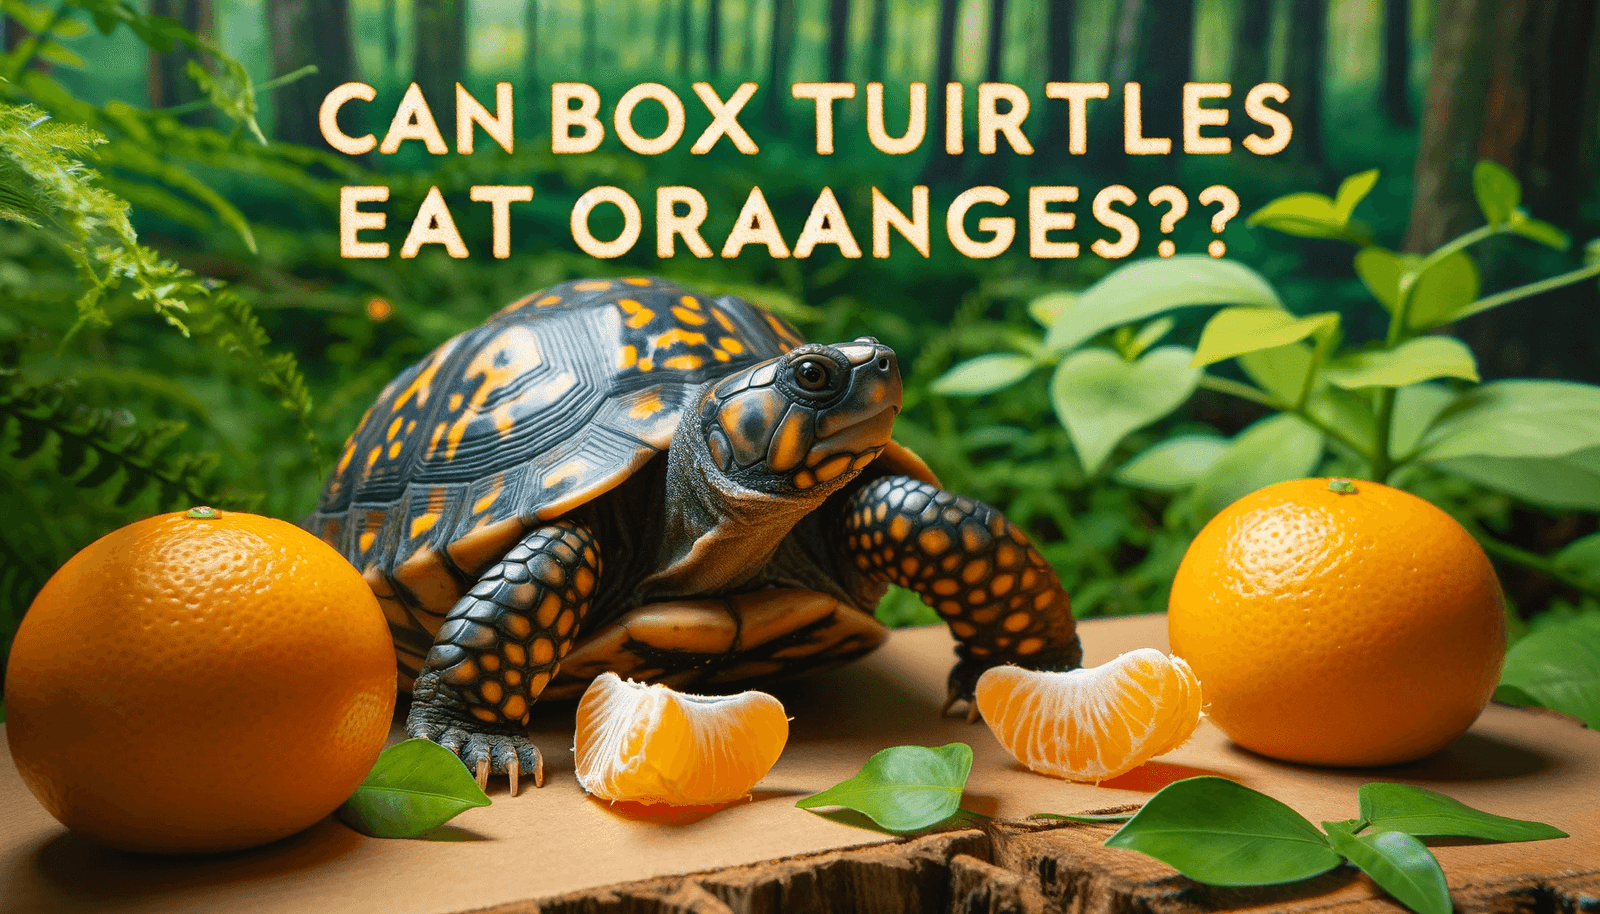 Can Box Turtles Eat Oranges